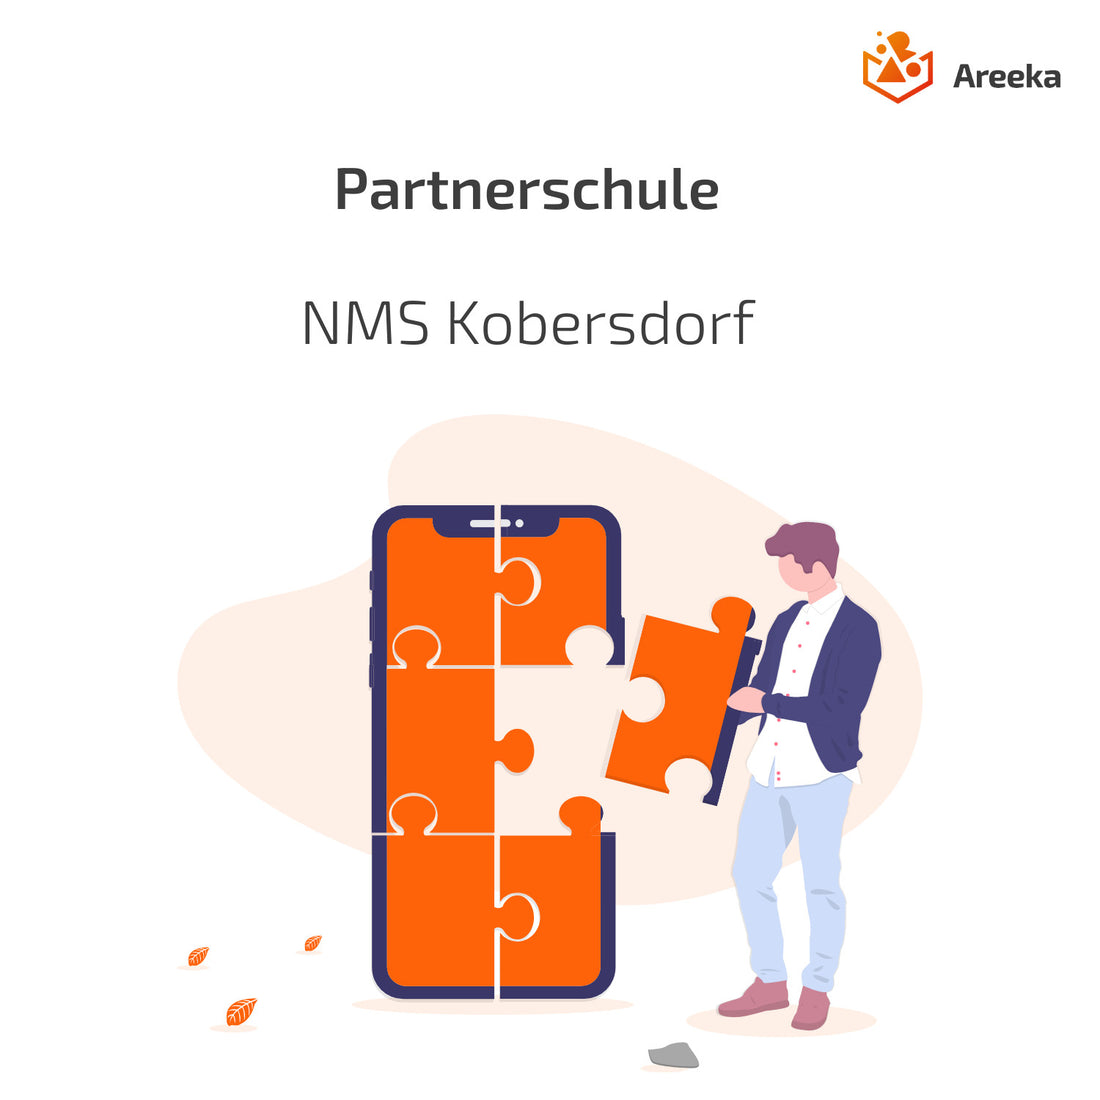 NMS Kobersdorf - Areeka Partnerschule